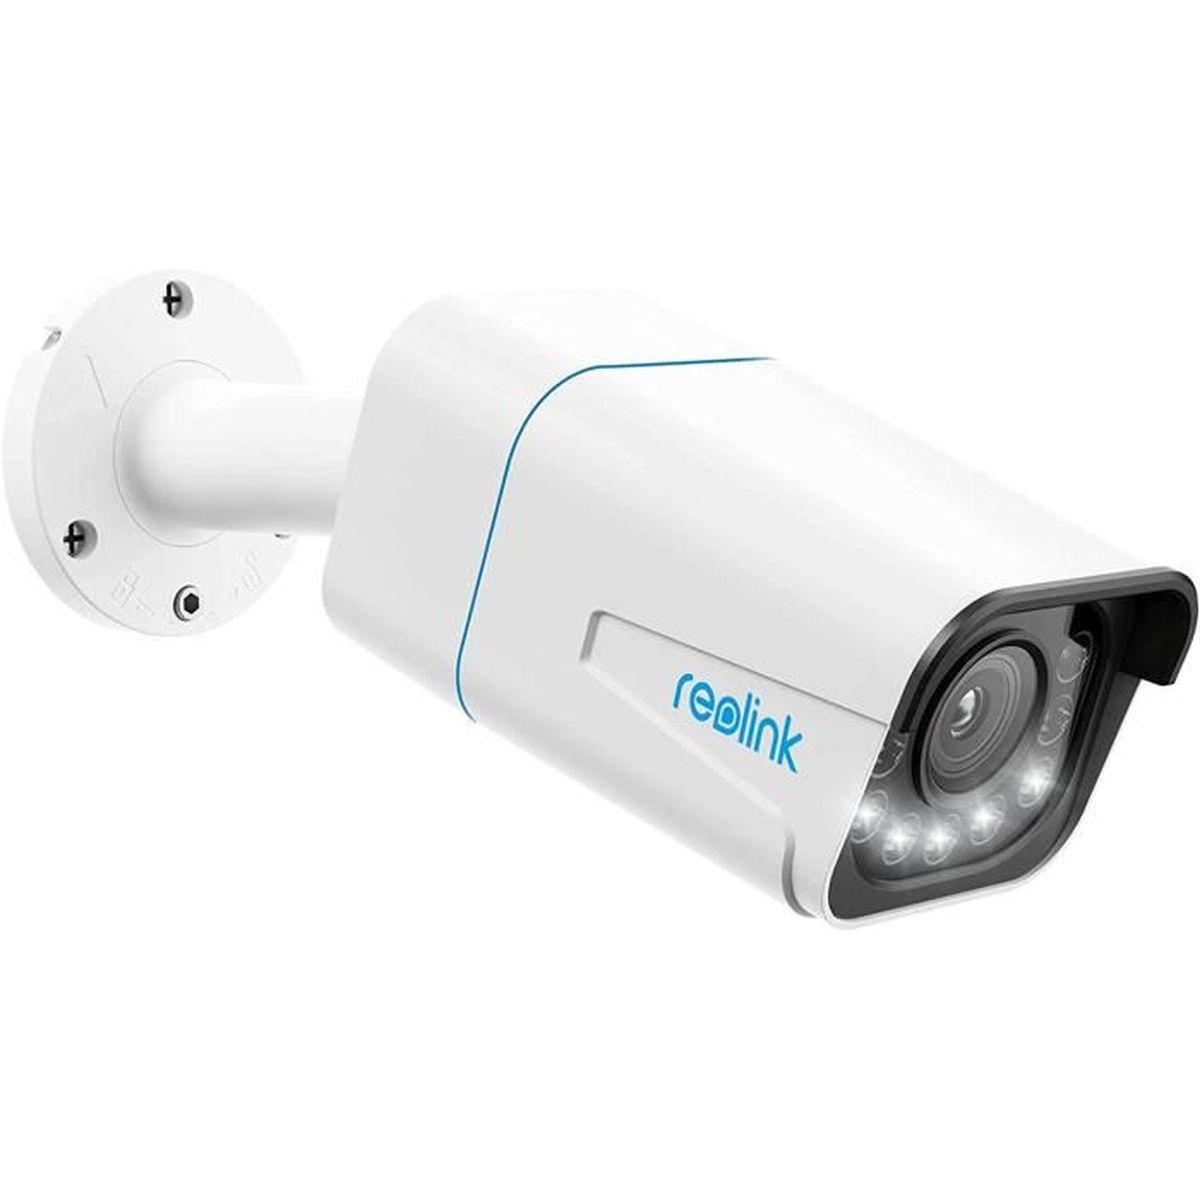 Caméra surveillance sans fil WiFi extérieur 360° - EZVIZ - Mr